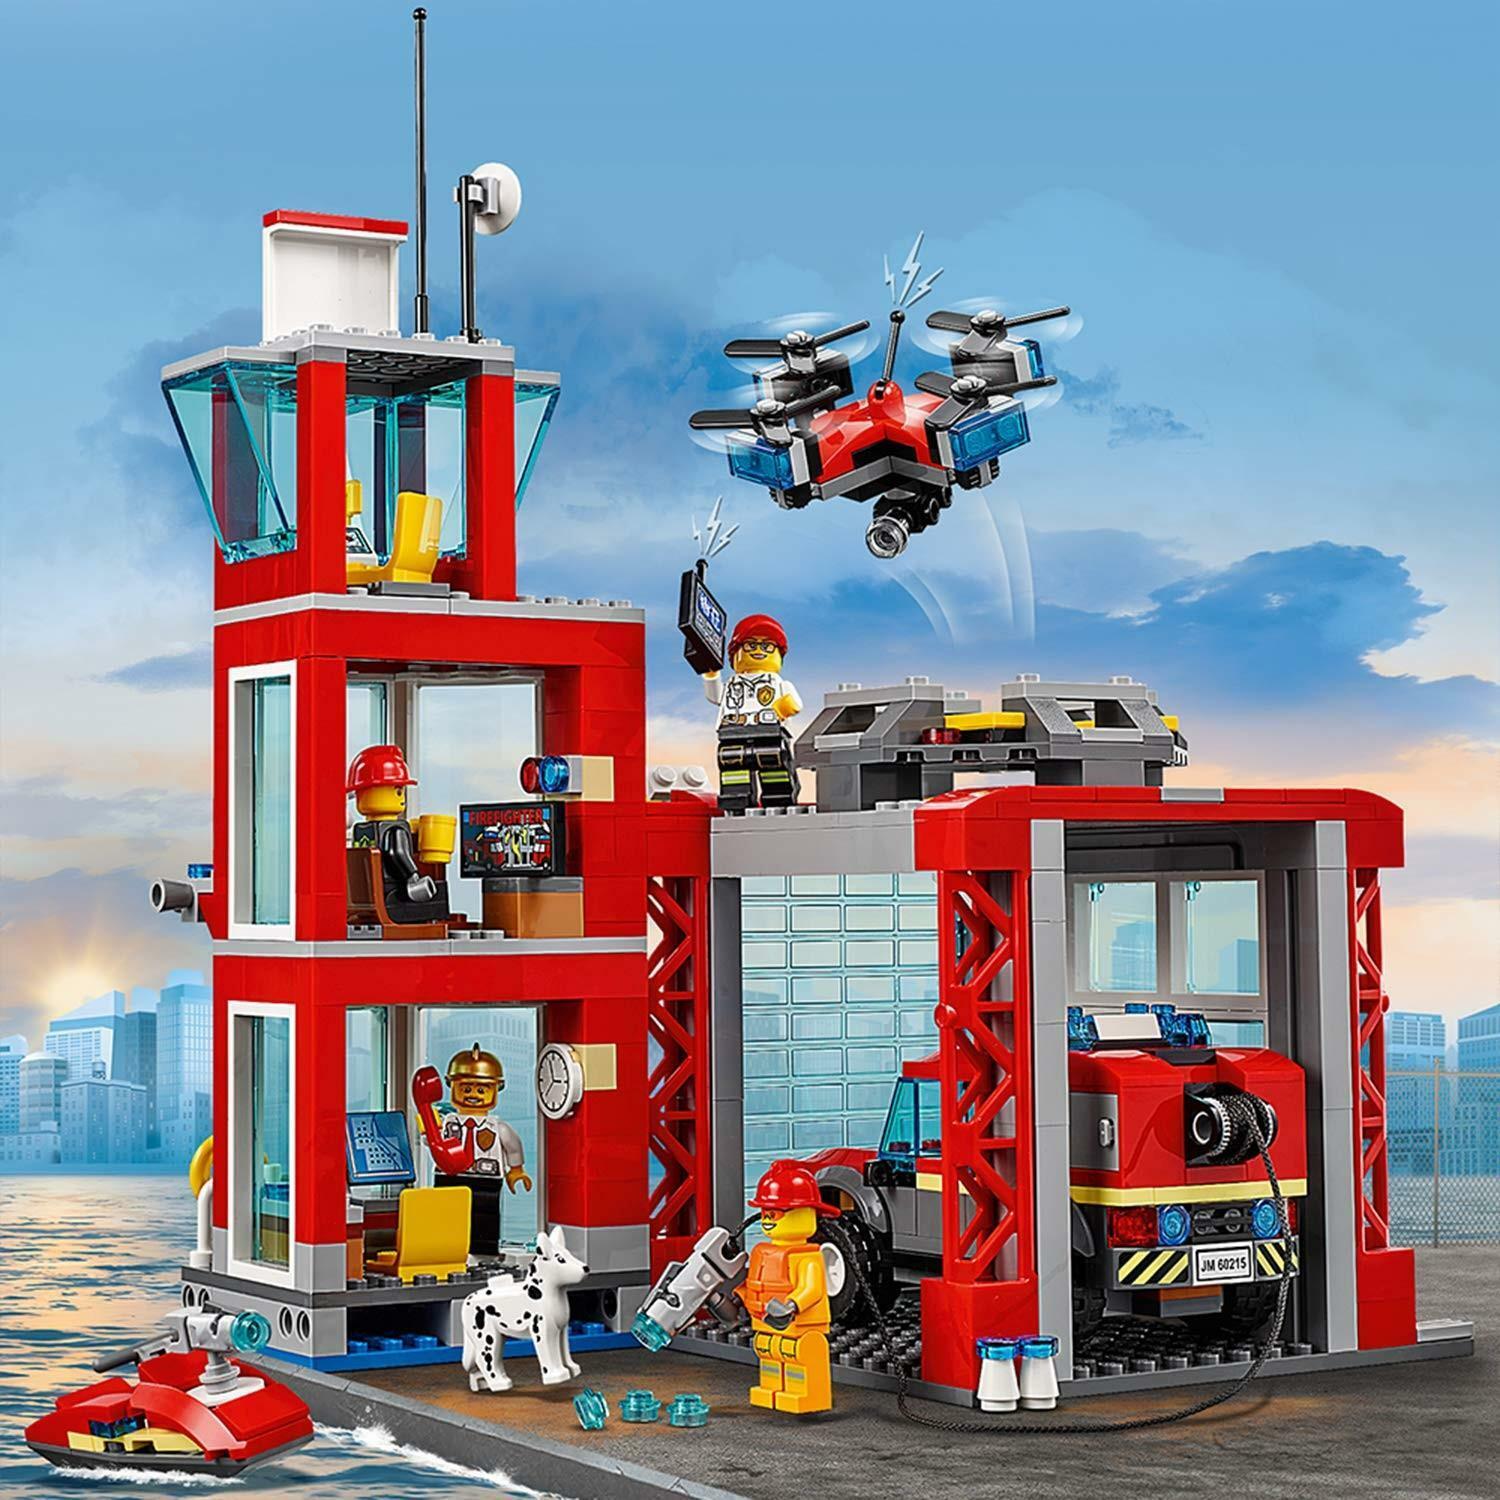 lego lego city 60215 - caserma dei pompieri